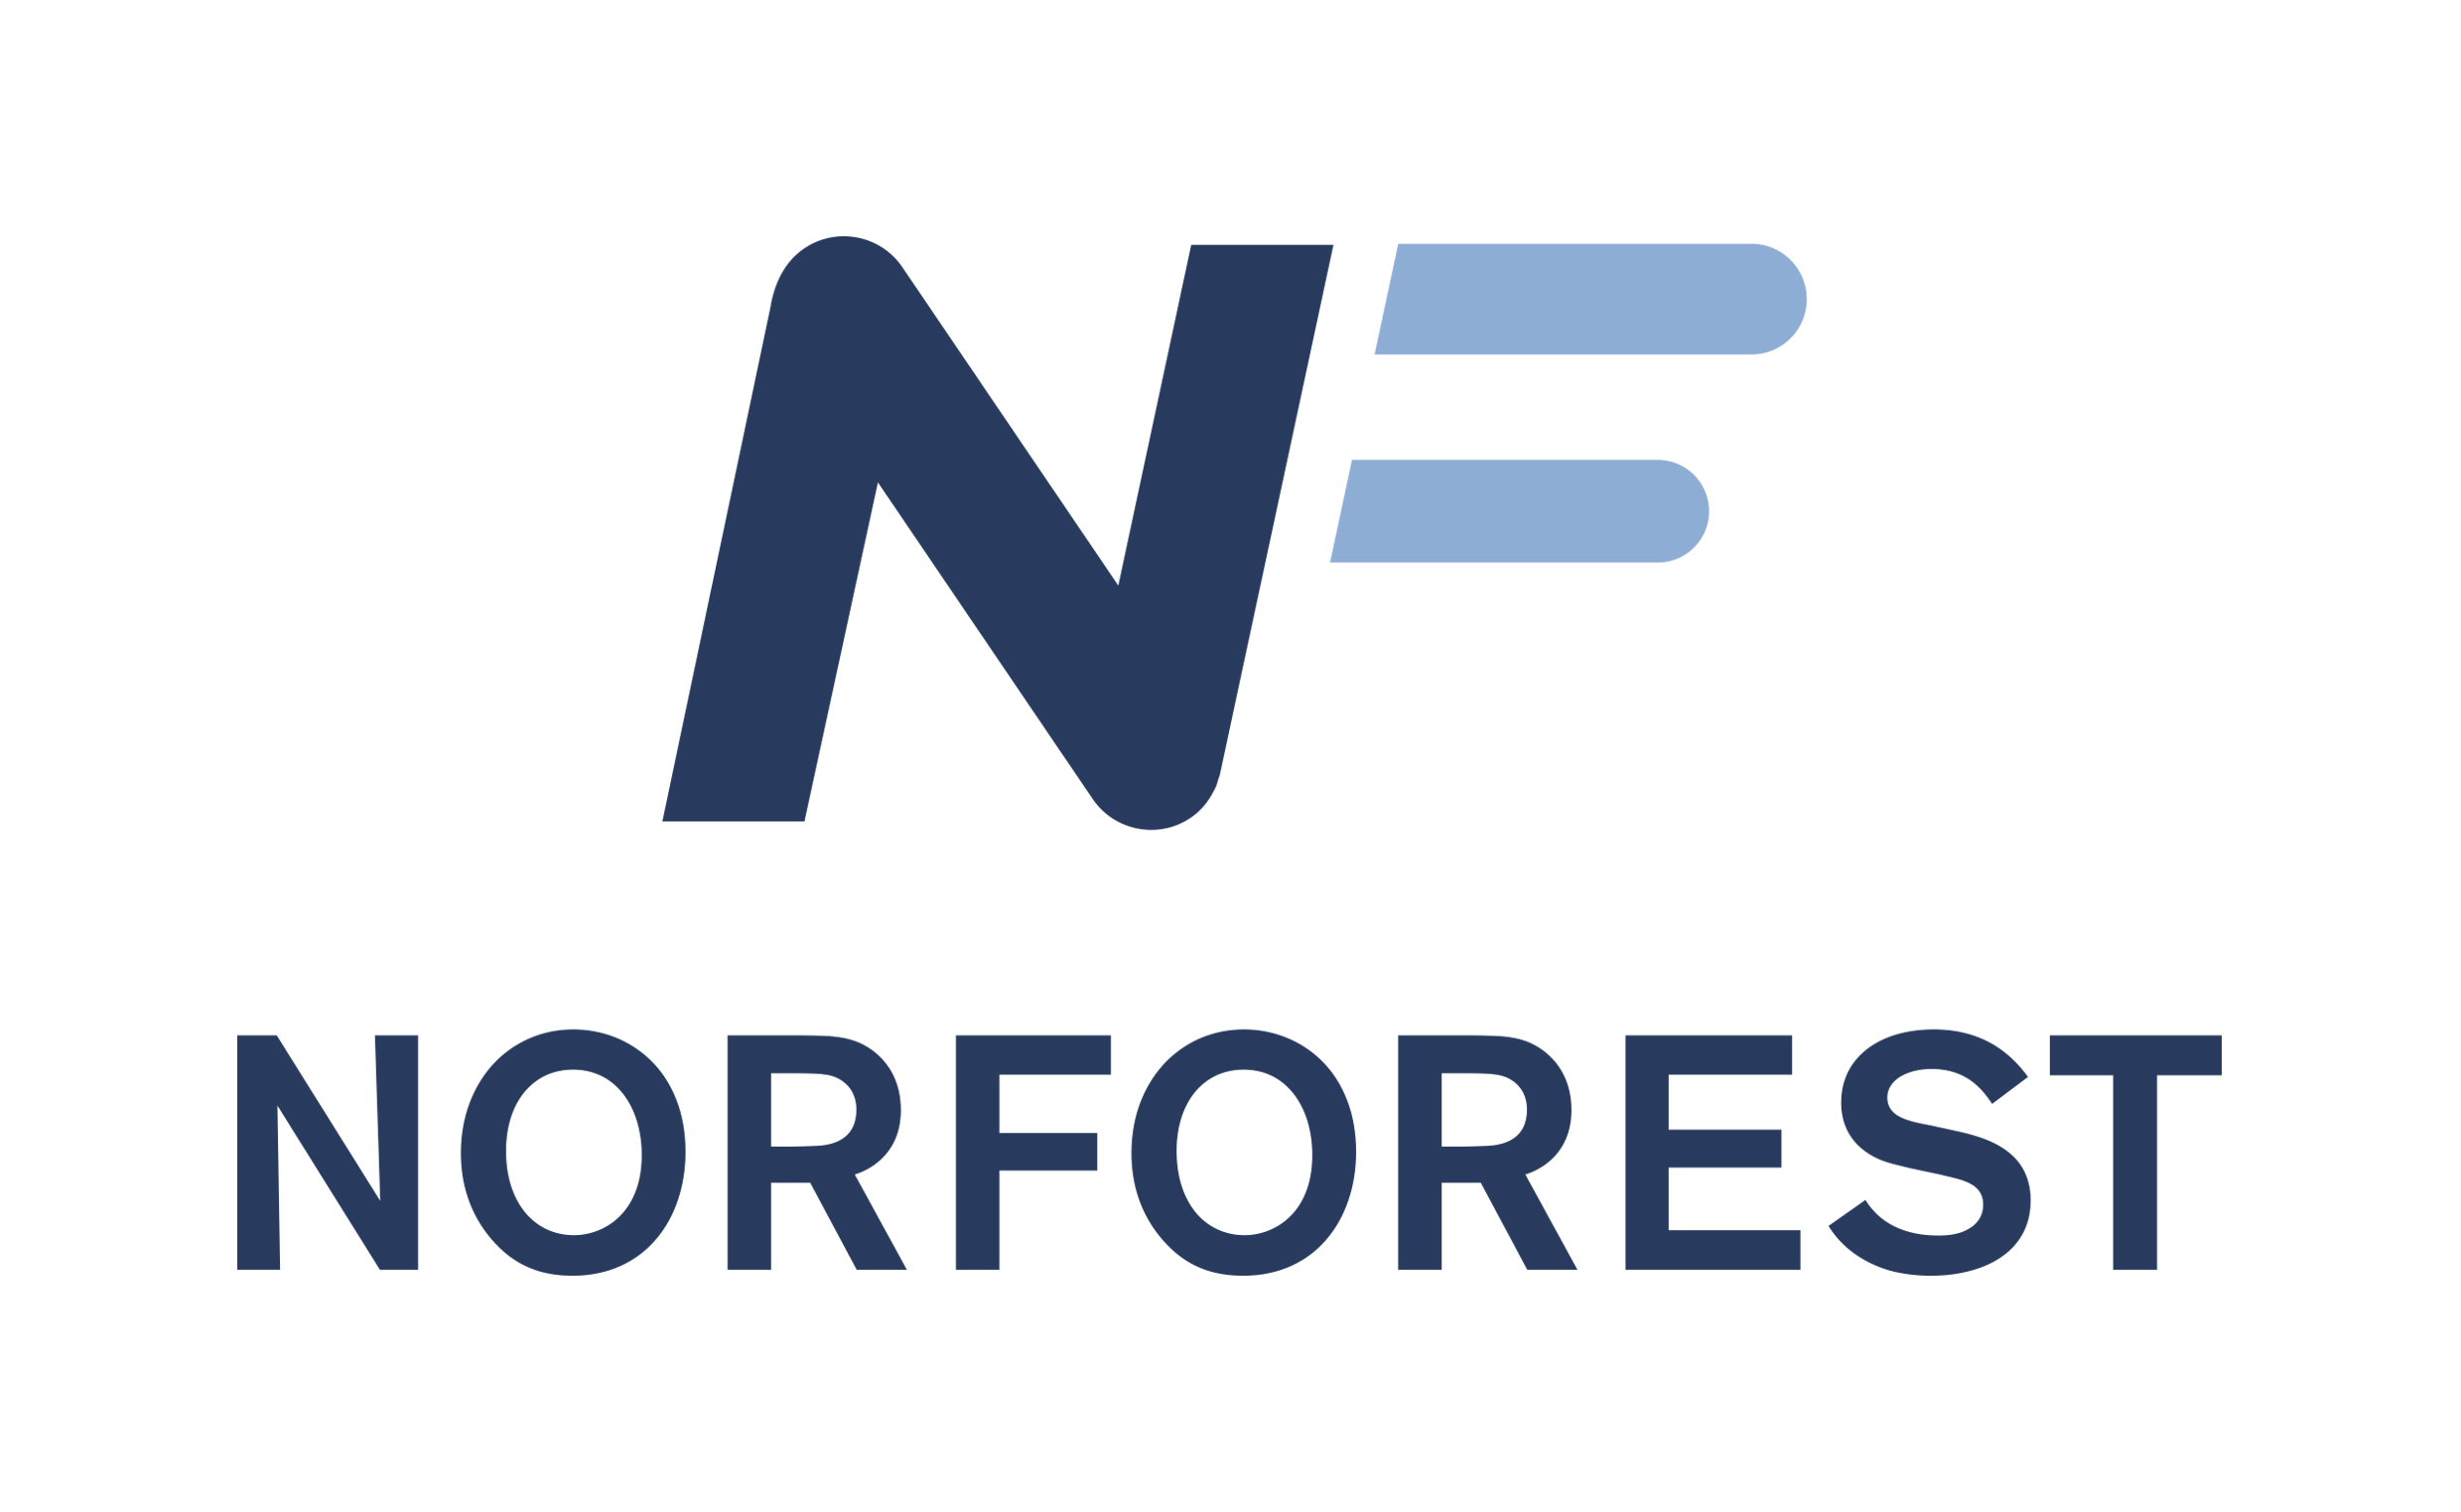 Norforest logo